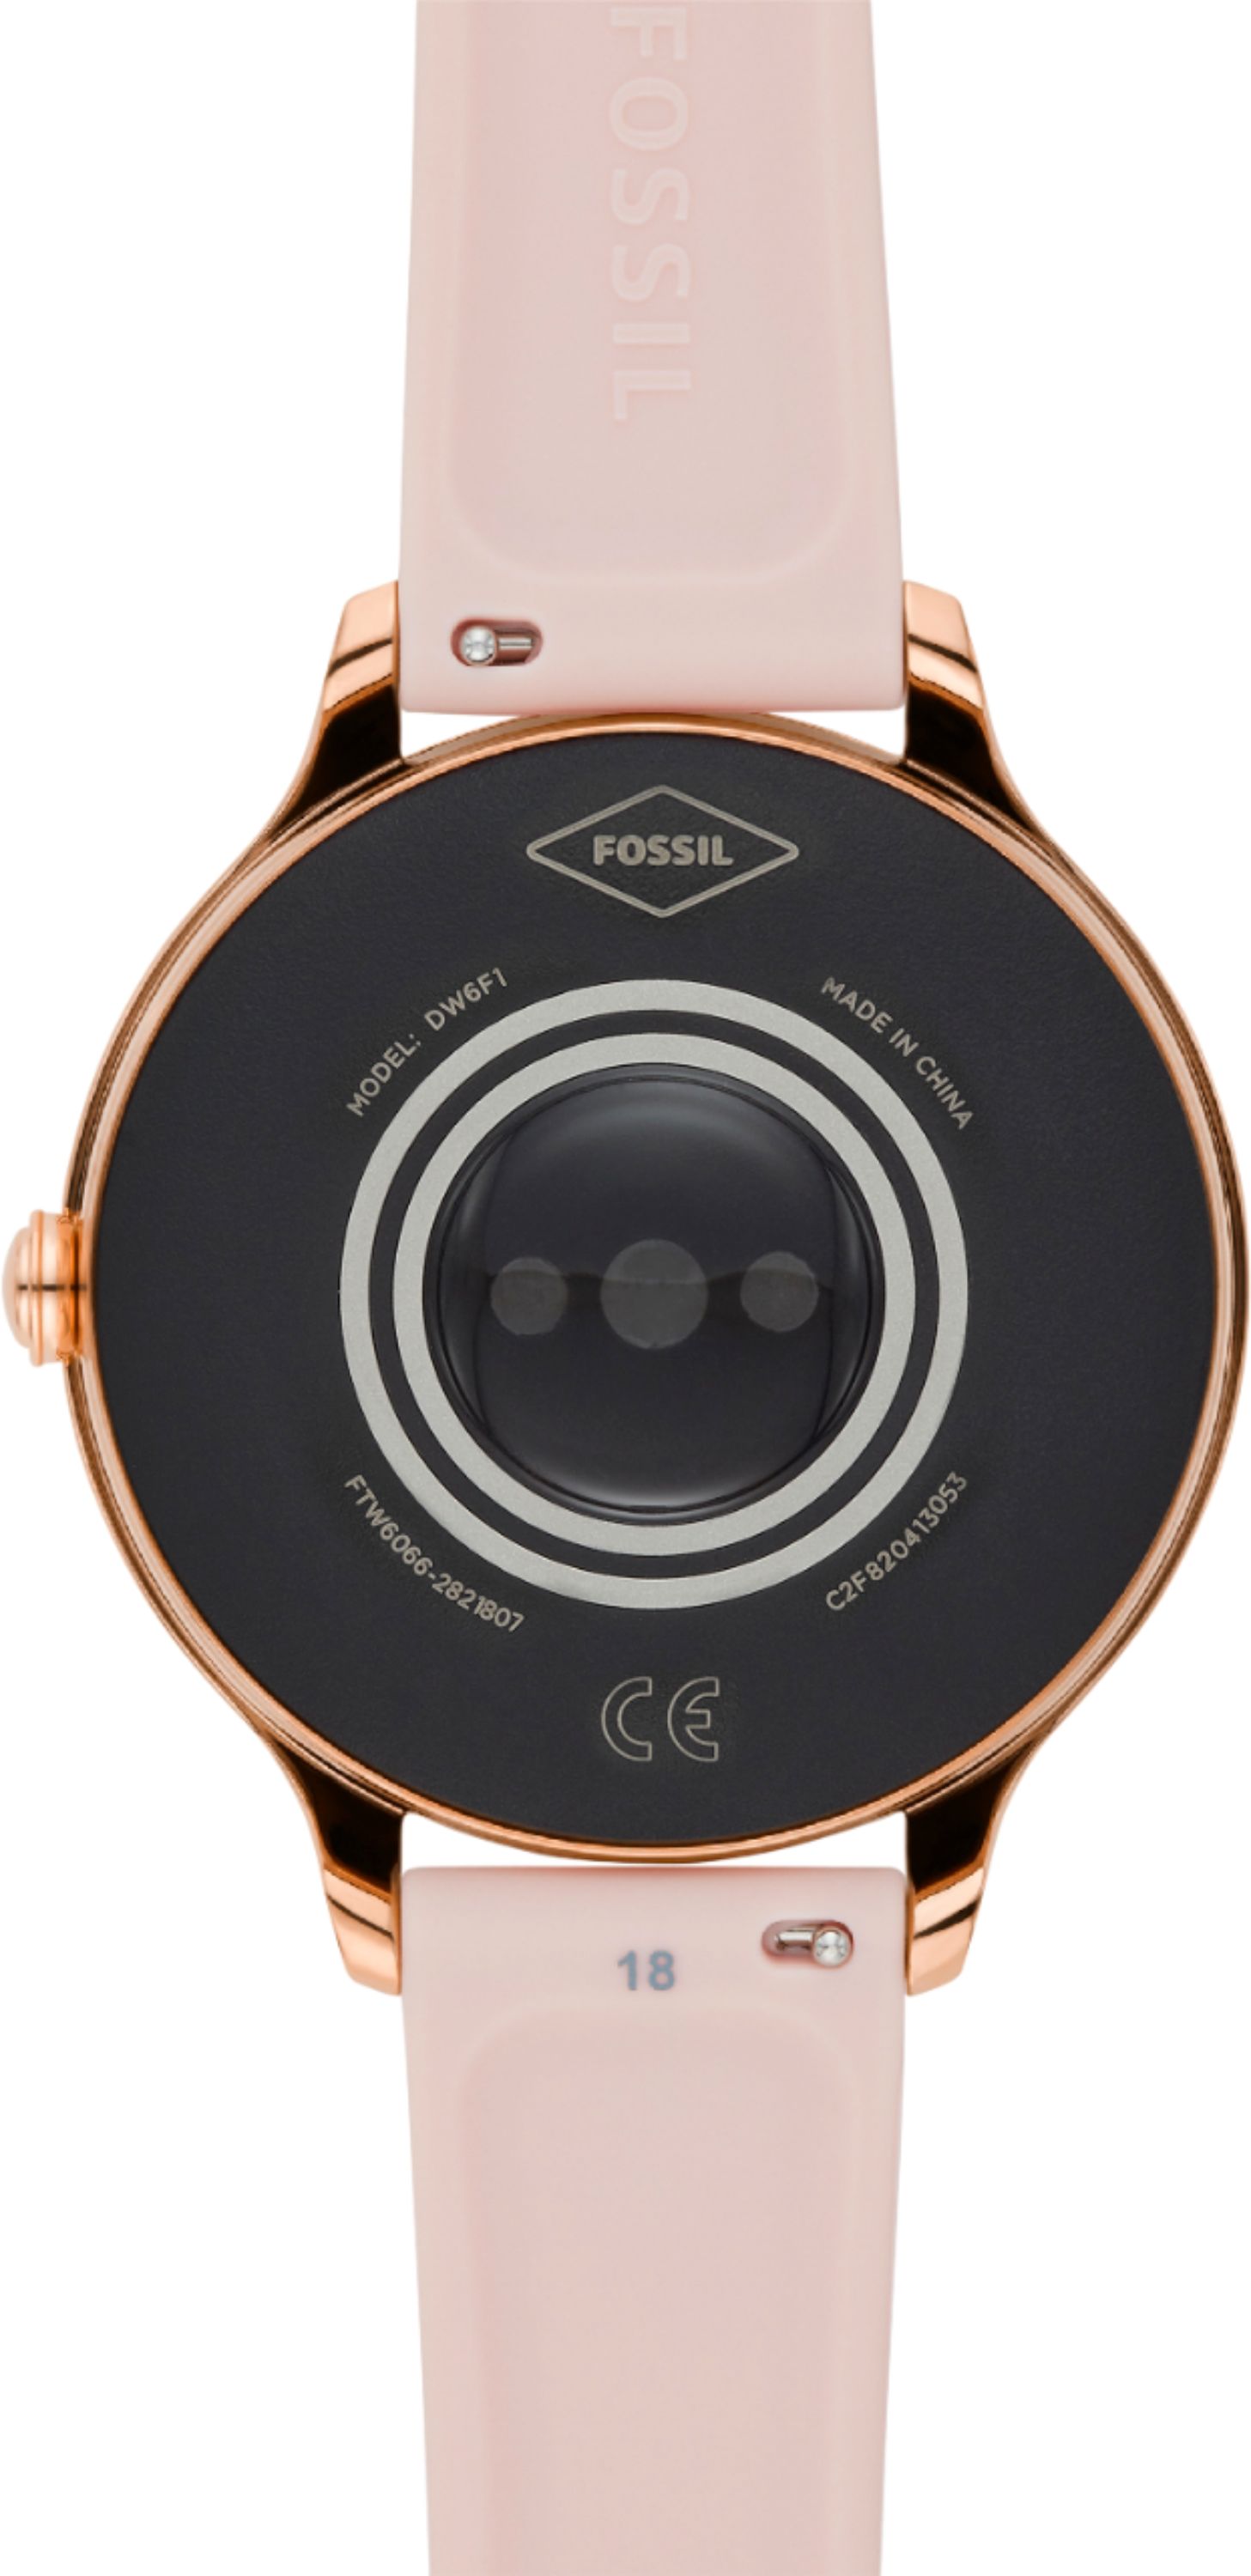 Back View: Fossil - Gen 5e Smartwatch 42mm Silicone - Blush